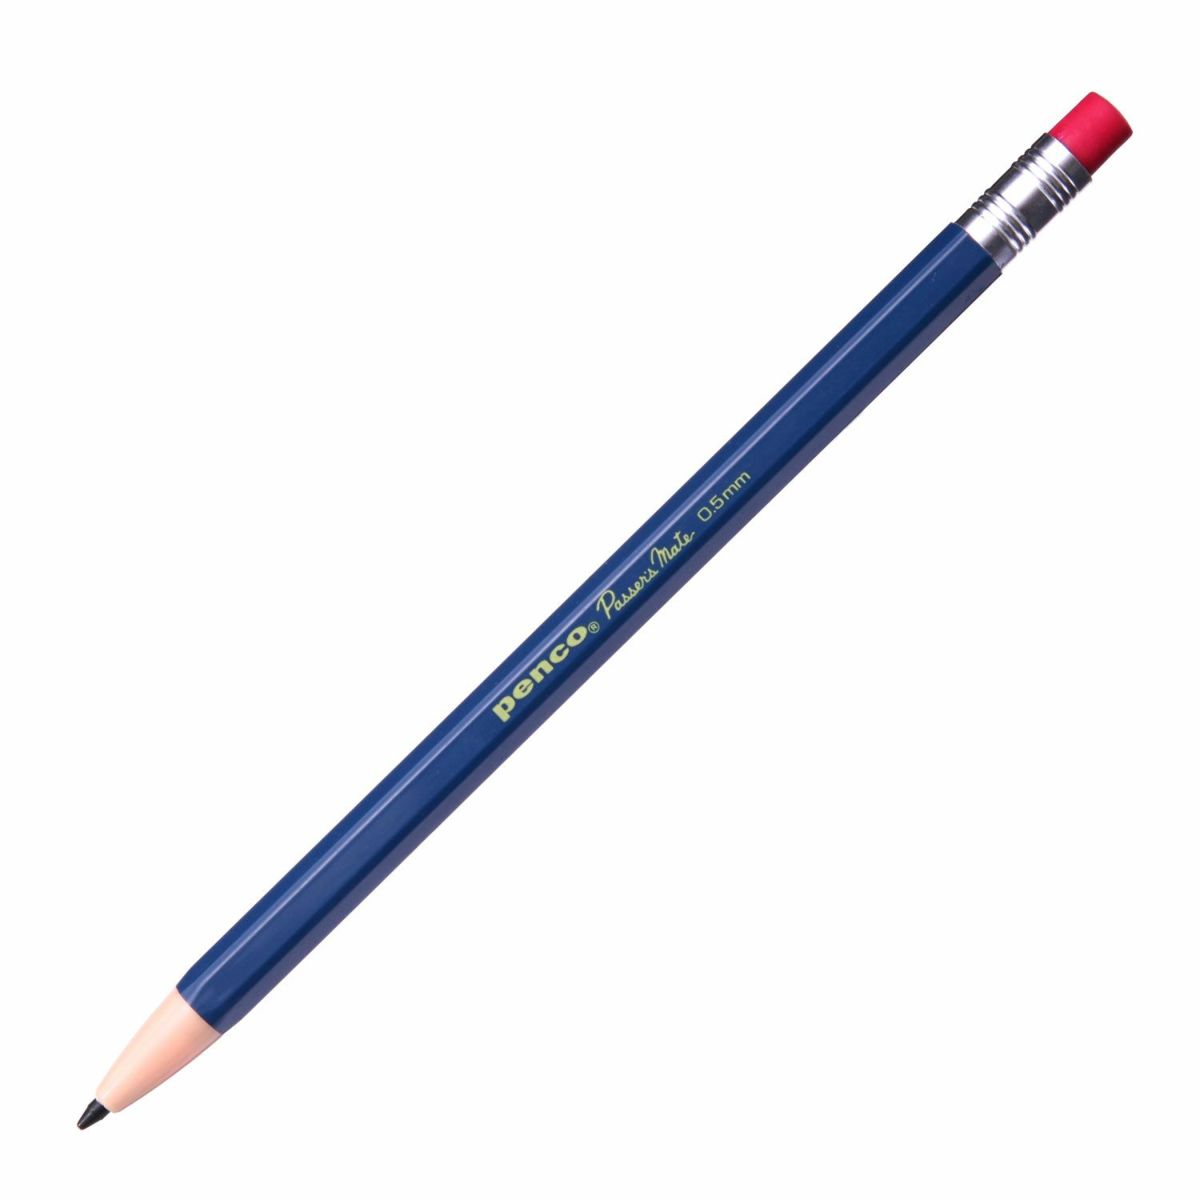 PENCO Passers Mate Pencil